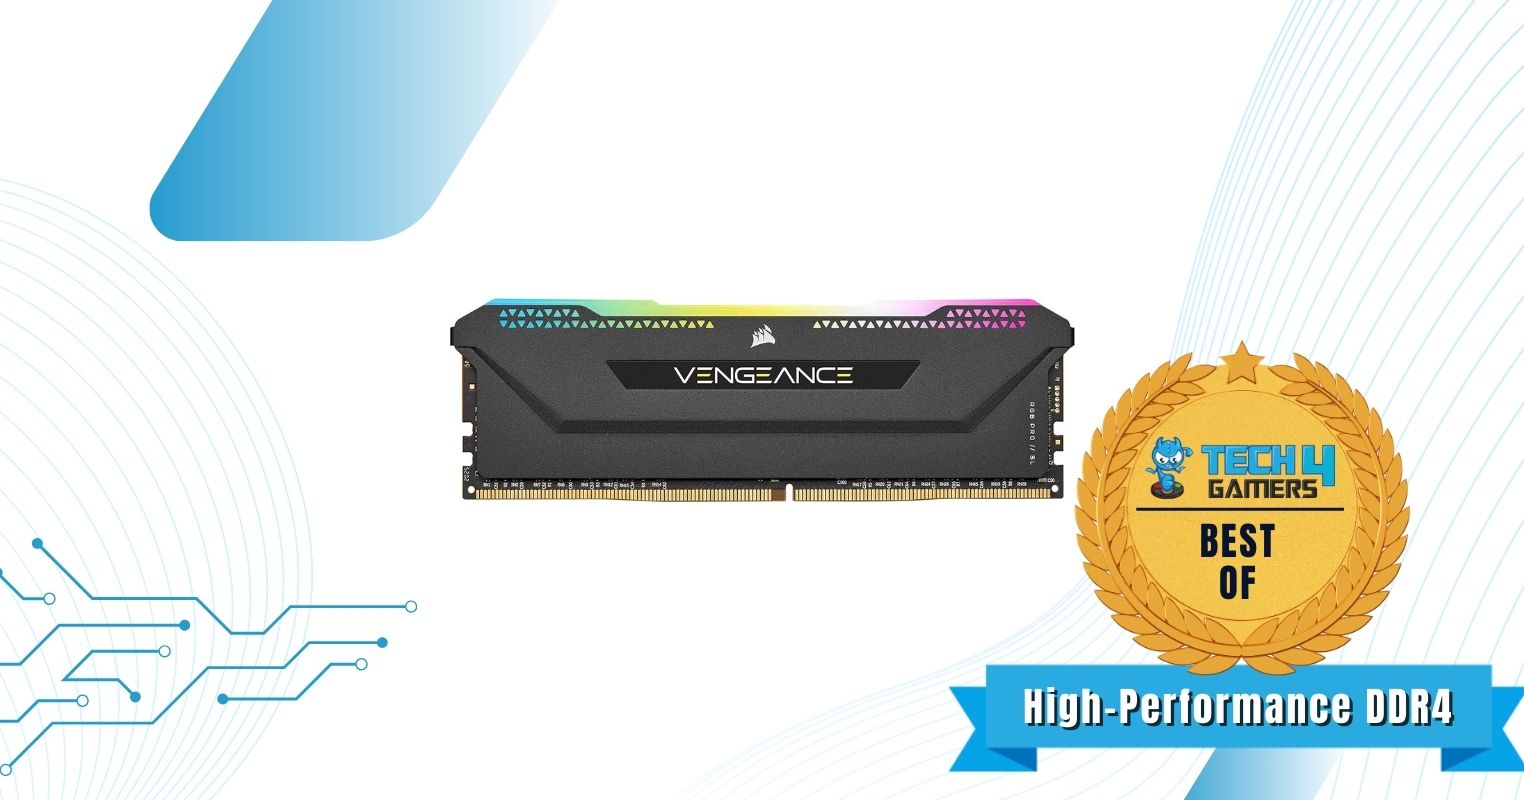 Corsair Vengeance RGB PRO SL DDR4 - Best High-Performance DDR4 RAM